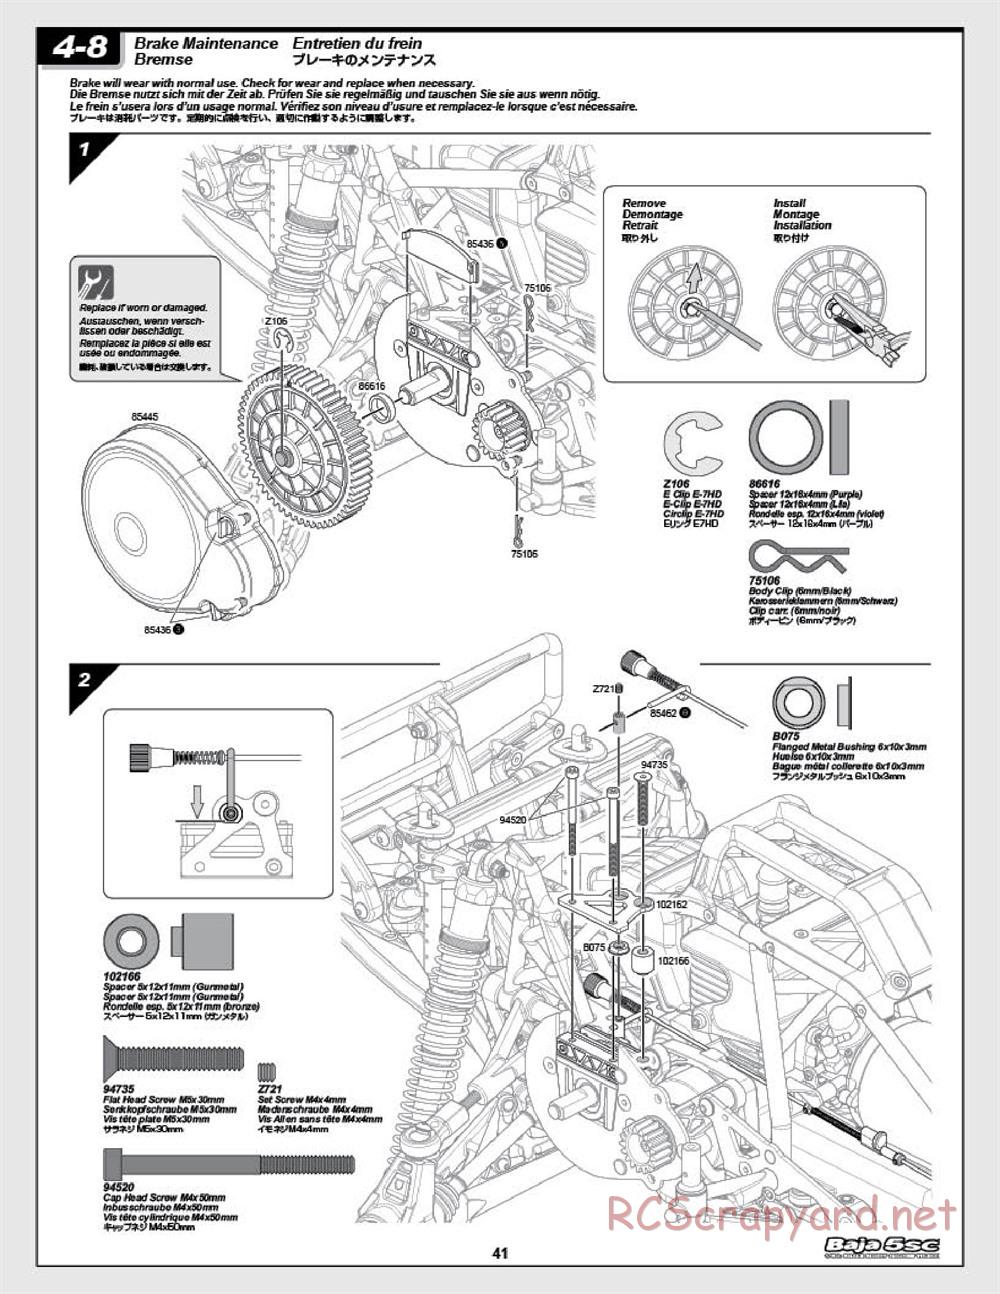 HPI - Baja 5SC - Manual - Page 41